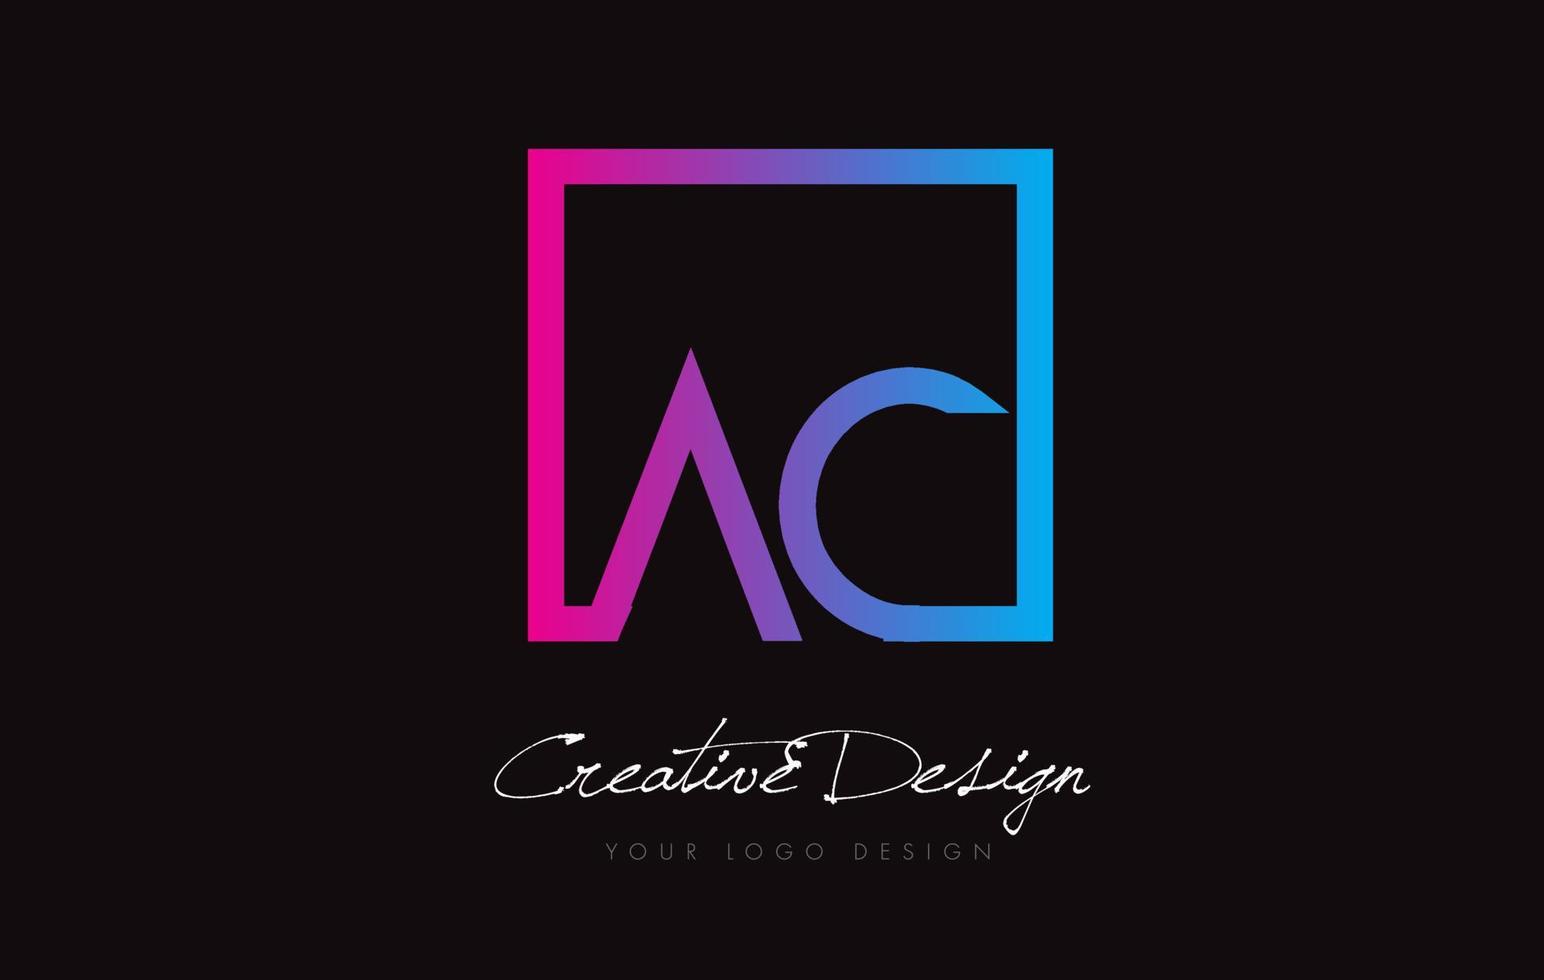 AC Square Frame Letter Logo Design with Purple Blue Colors. vector